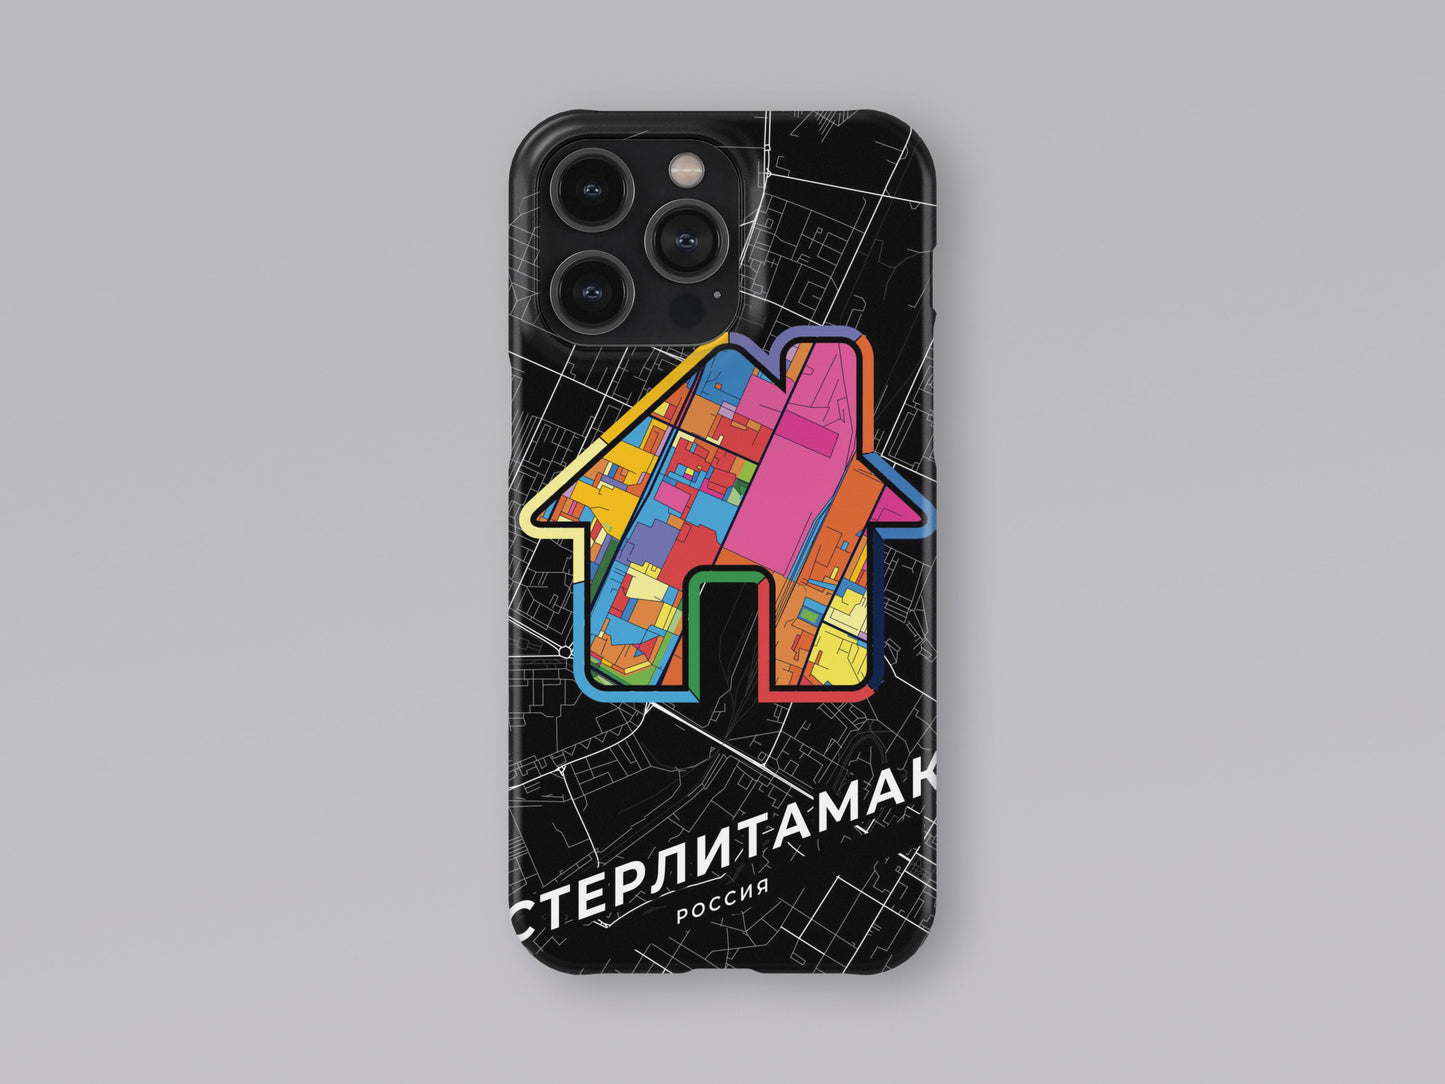 Sterlitamak Russia slim phone case with colorful icon 3